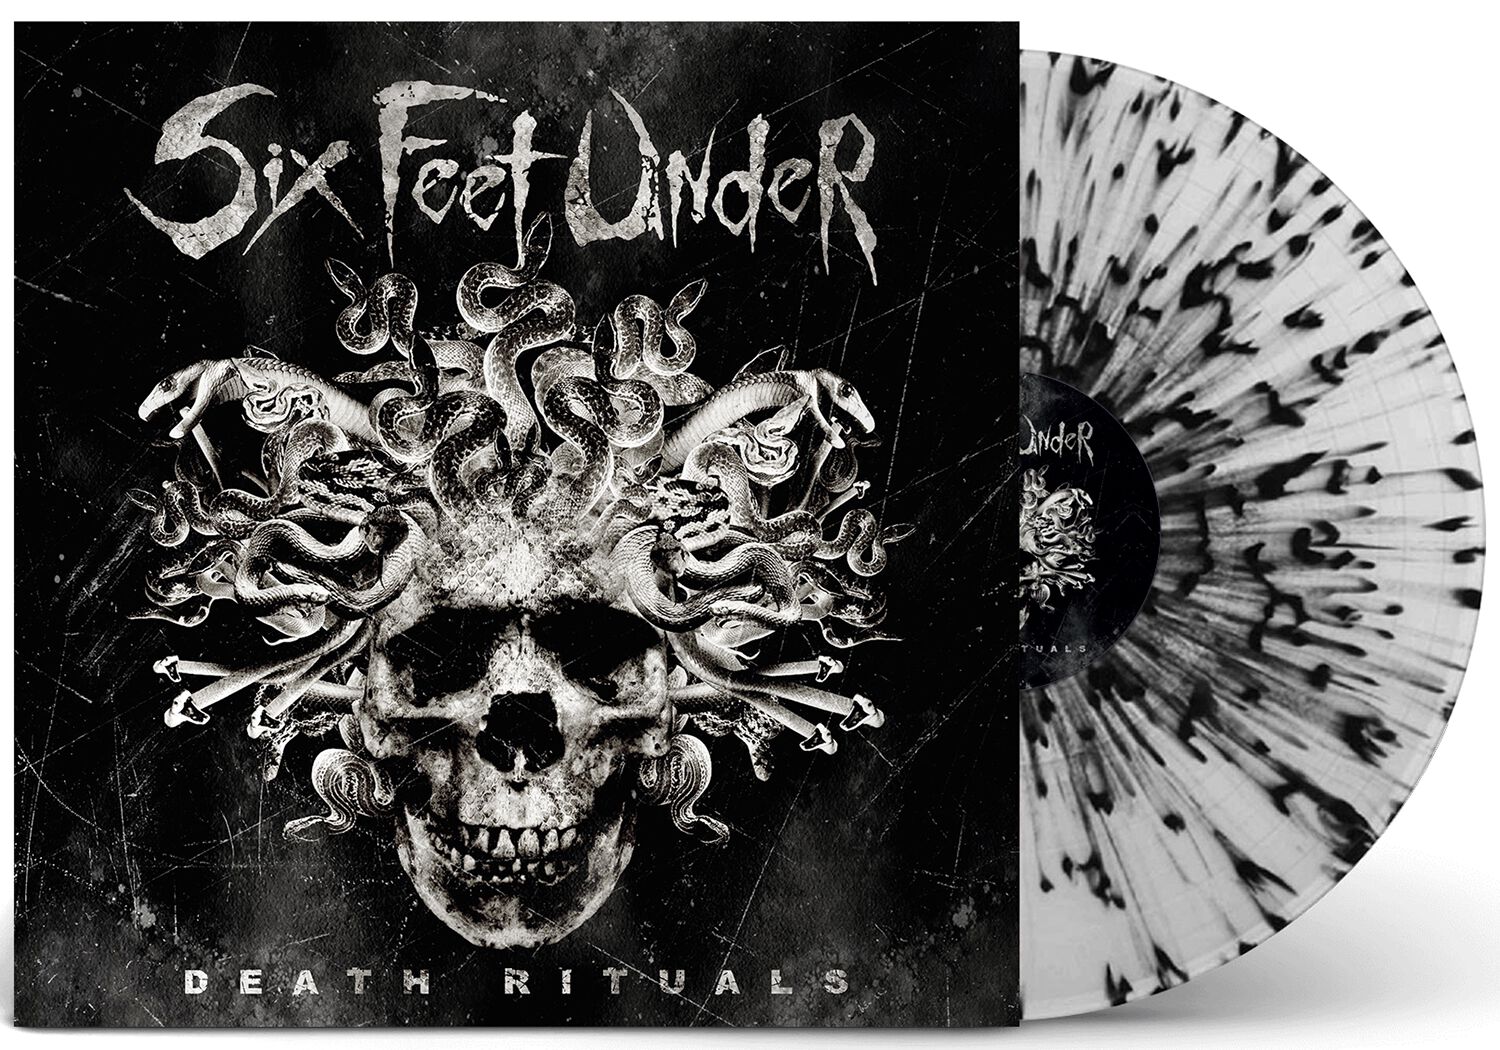 Image of Six Feet Under Death Rituals LP splattered